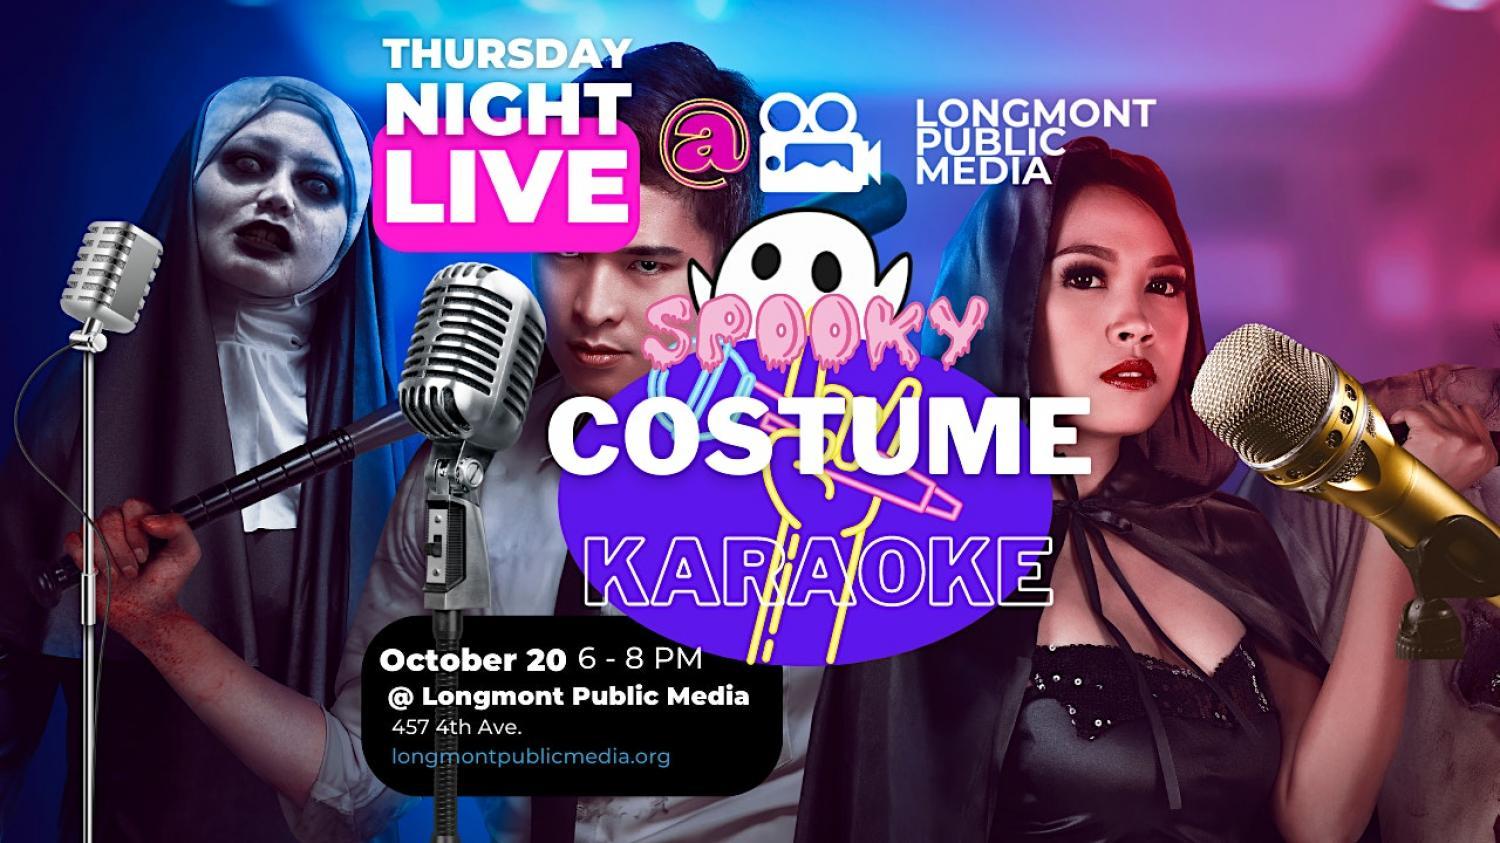 Costume Karaoke Night: part of Thursday Night Live
Thu Oct 20, 7:00 PM - Thu Oct 20, 7:00 PM